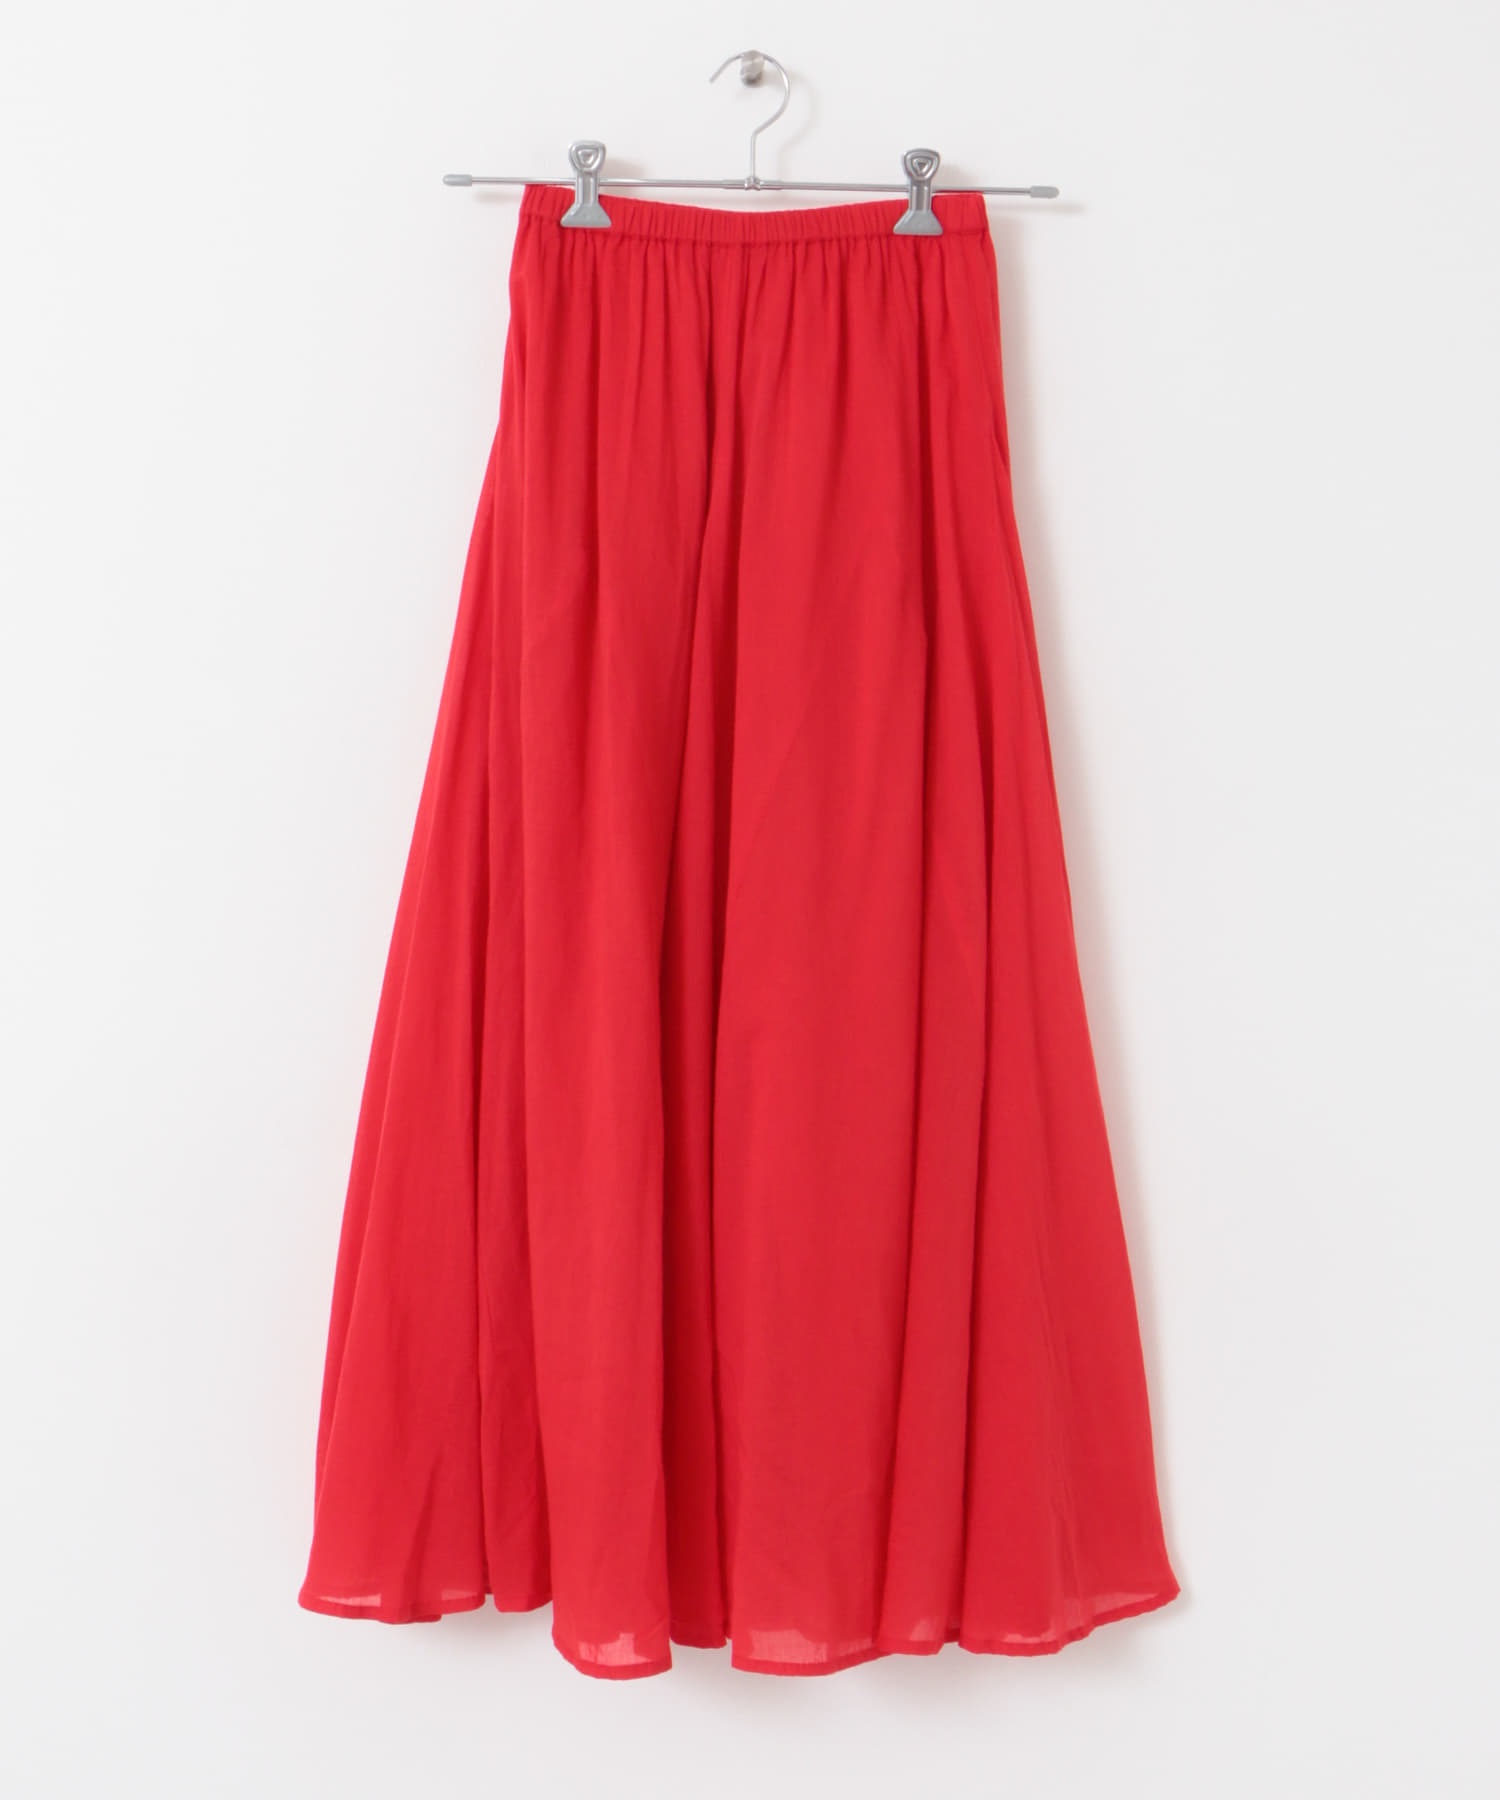 空氣感棉質巴里紗傘狀裙(紅色-FREE-RED)